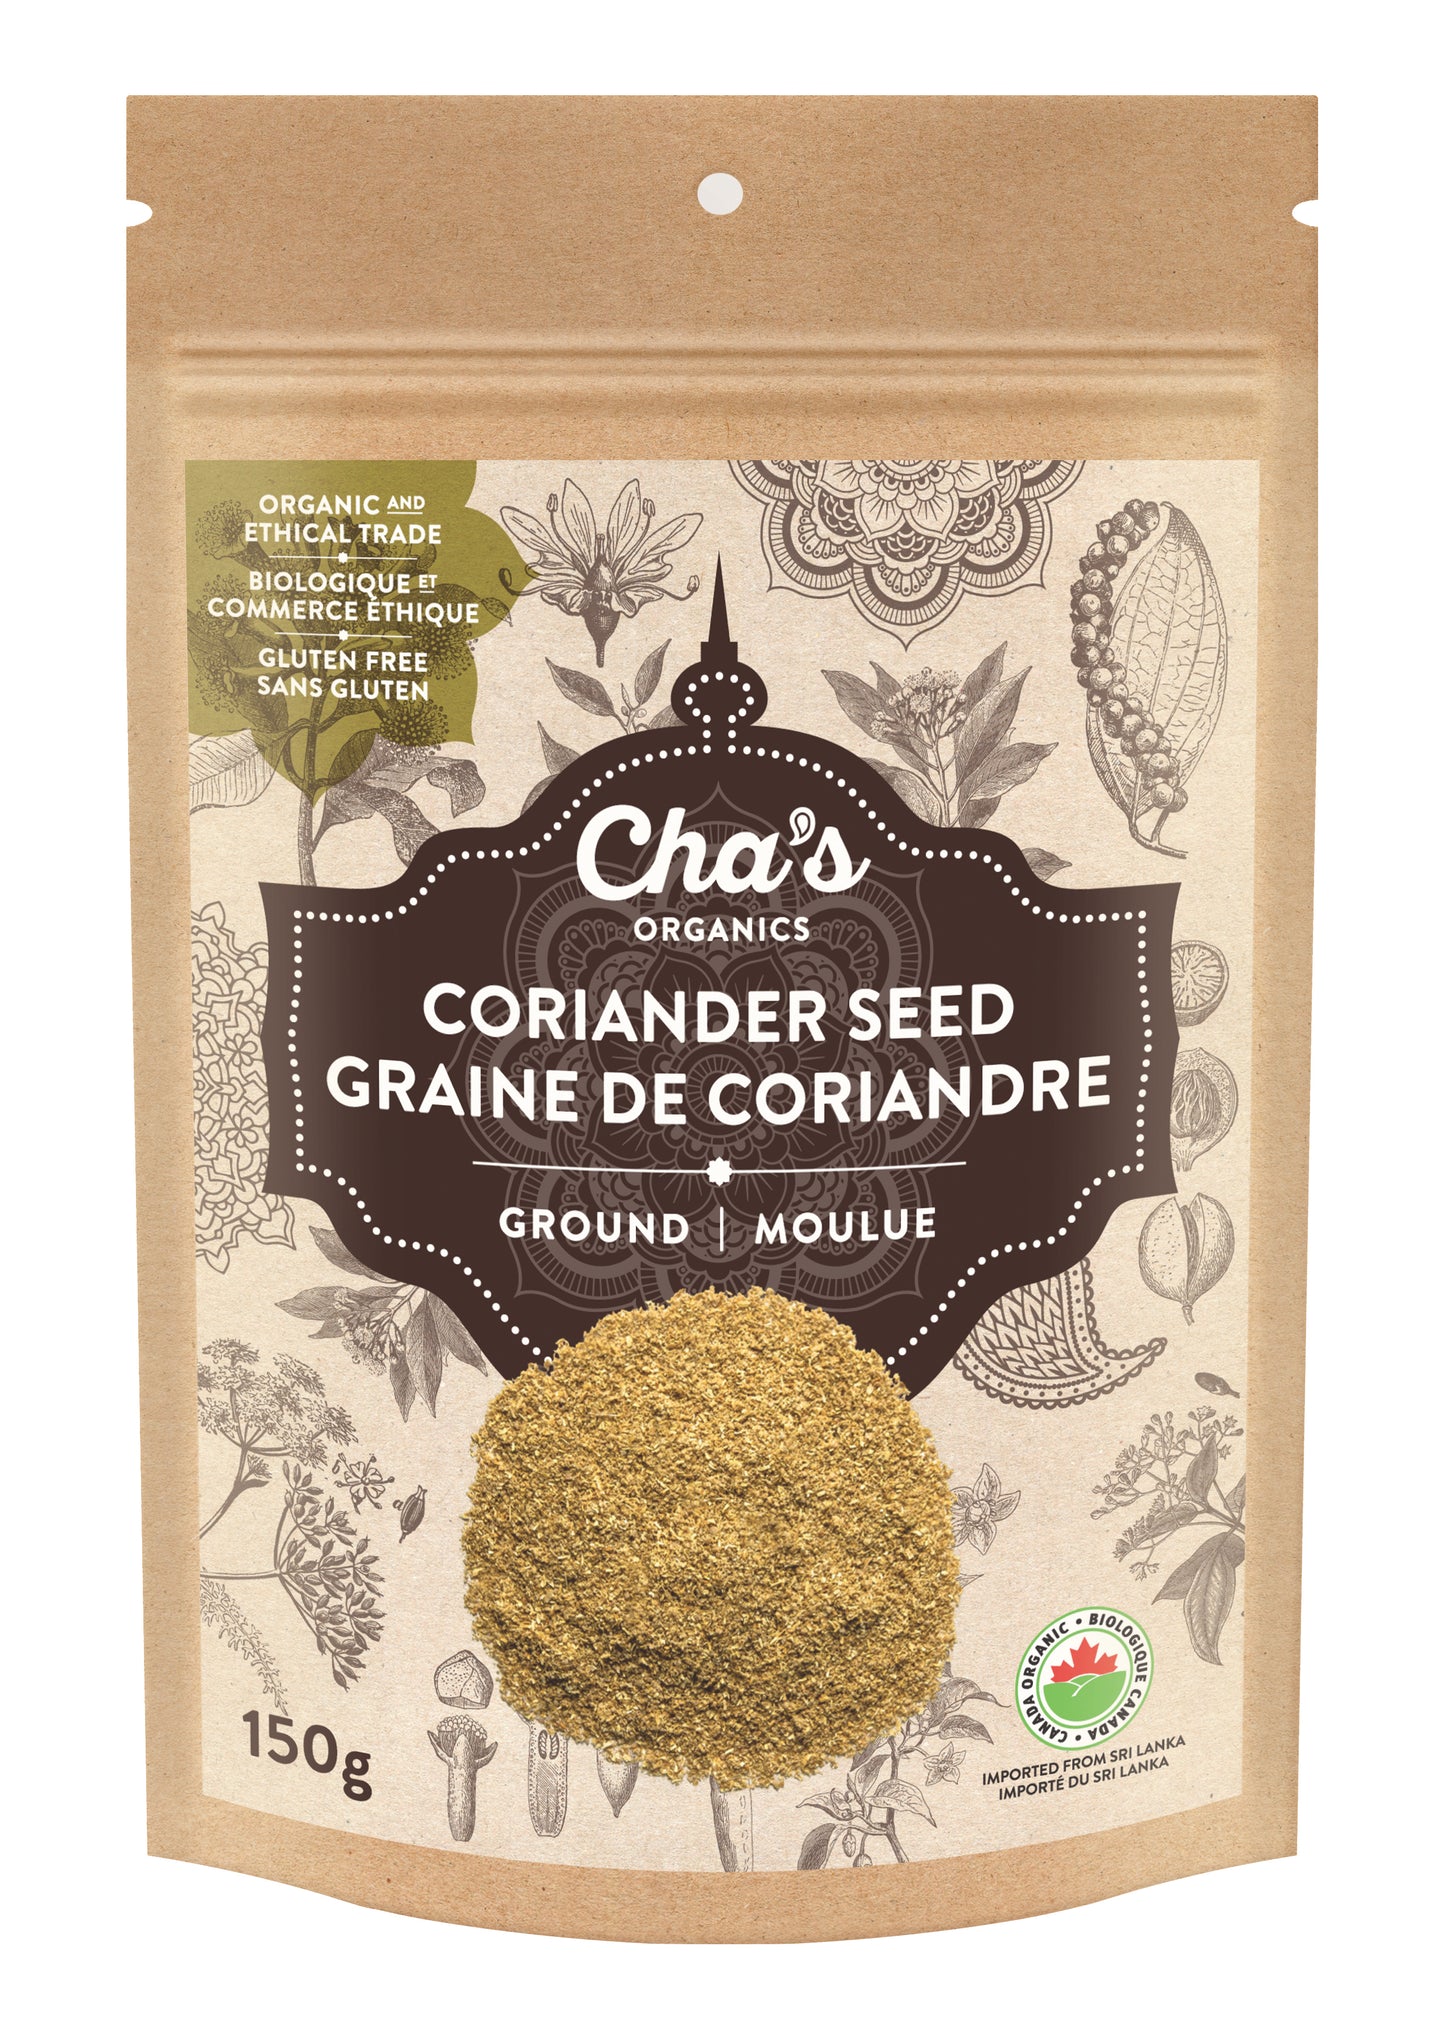 Chas Organics Ground Coriander Seed, Case of 6 x 150g